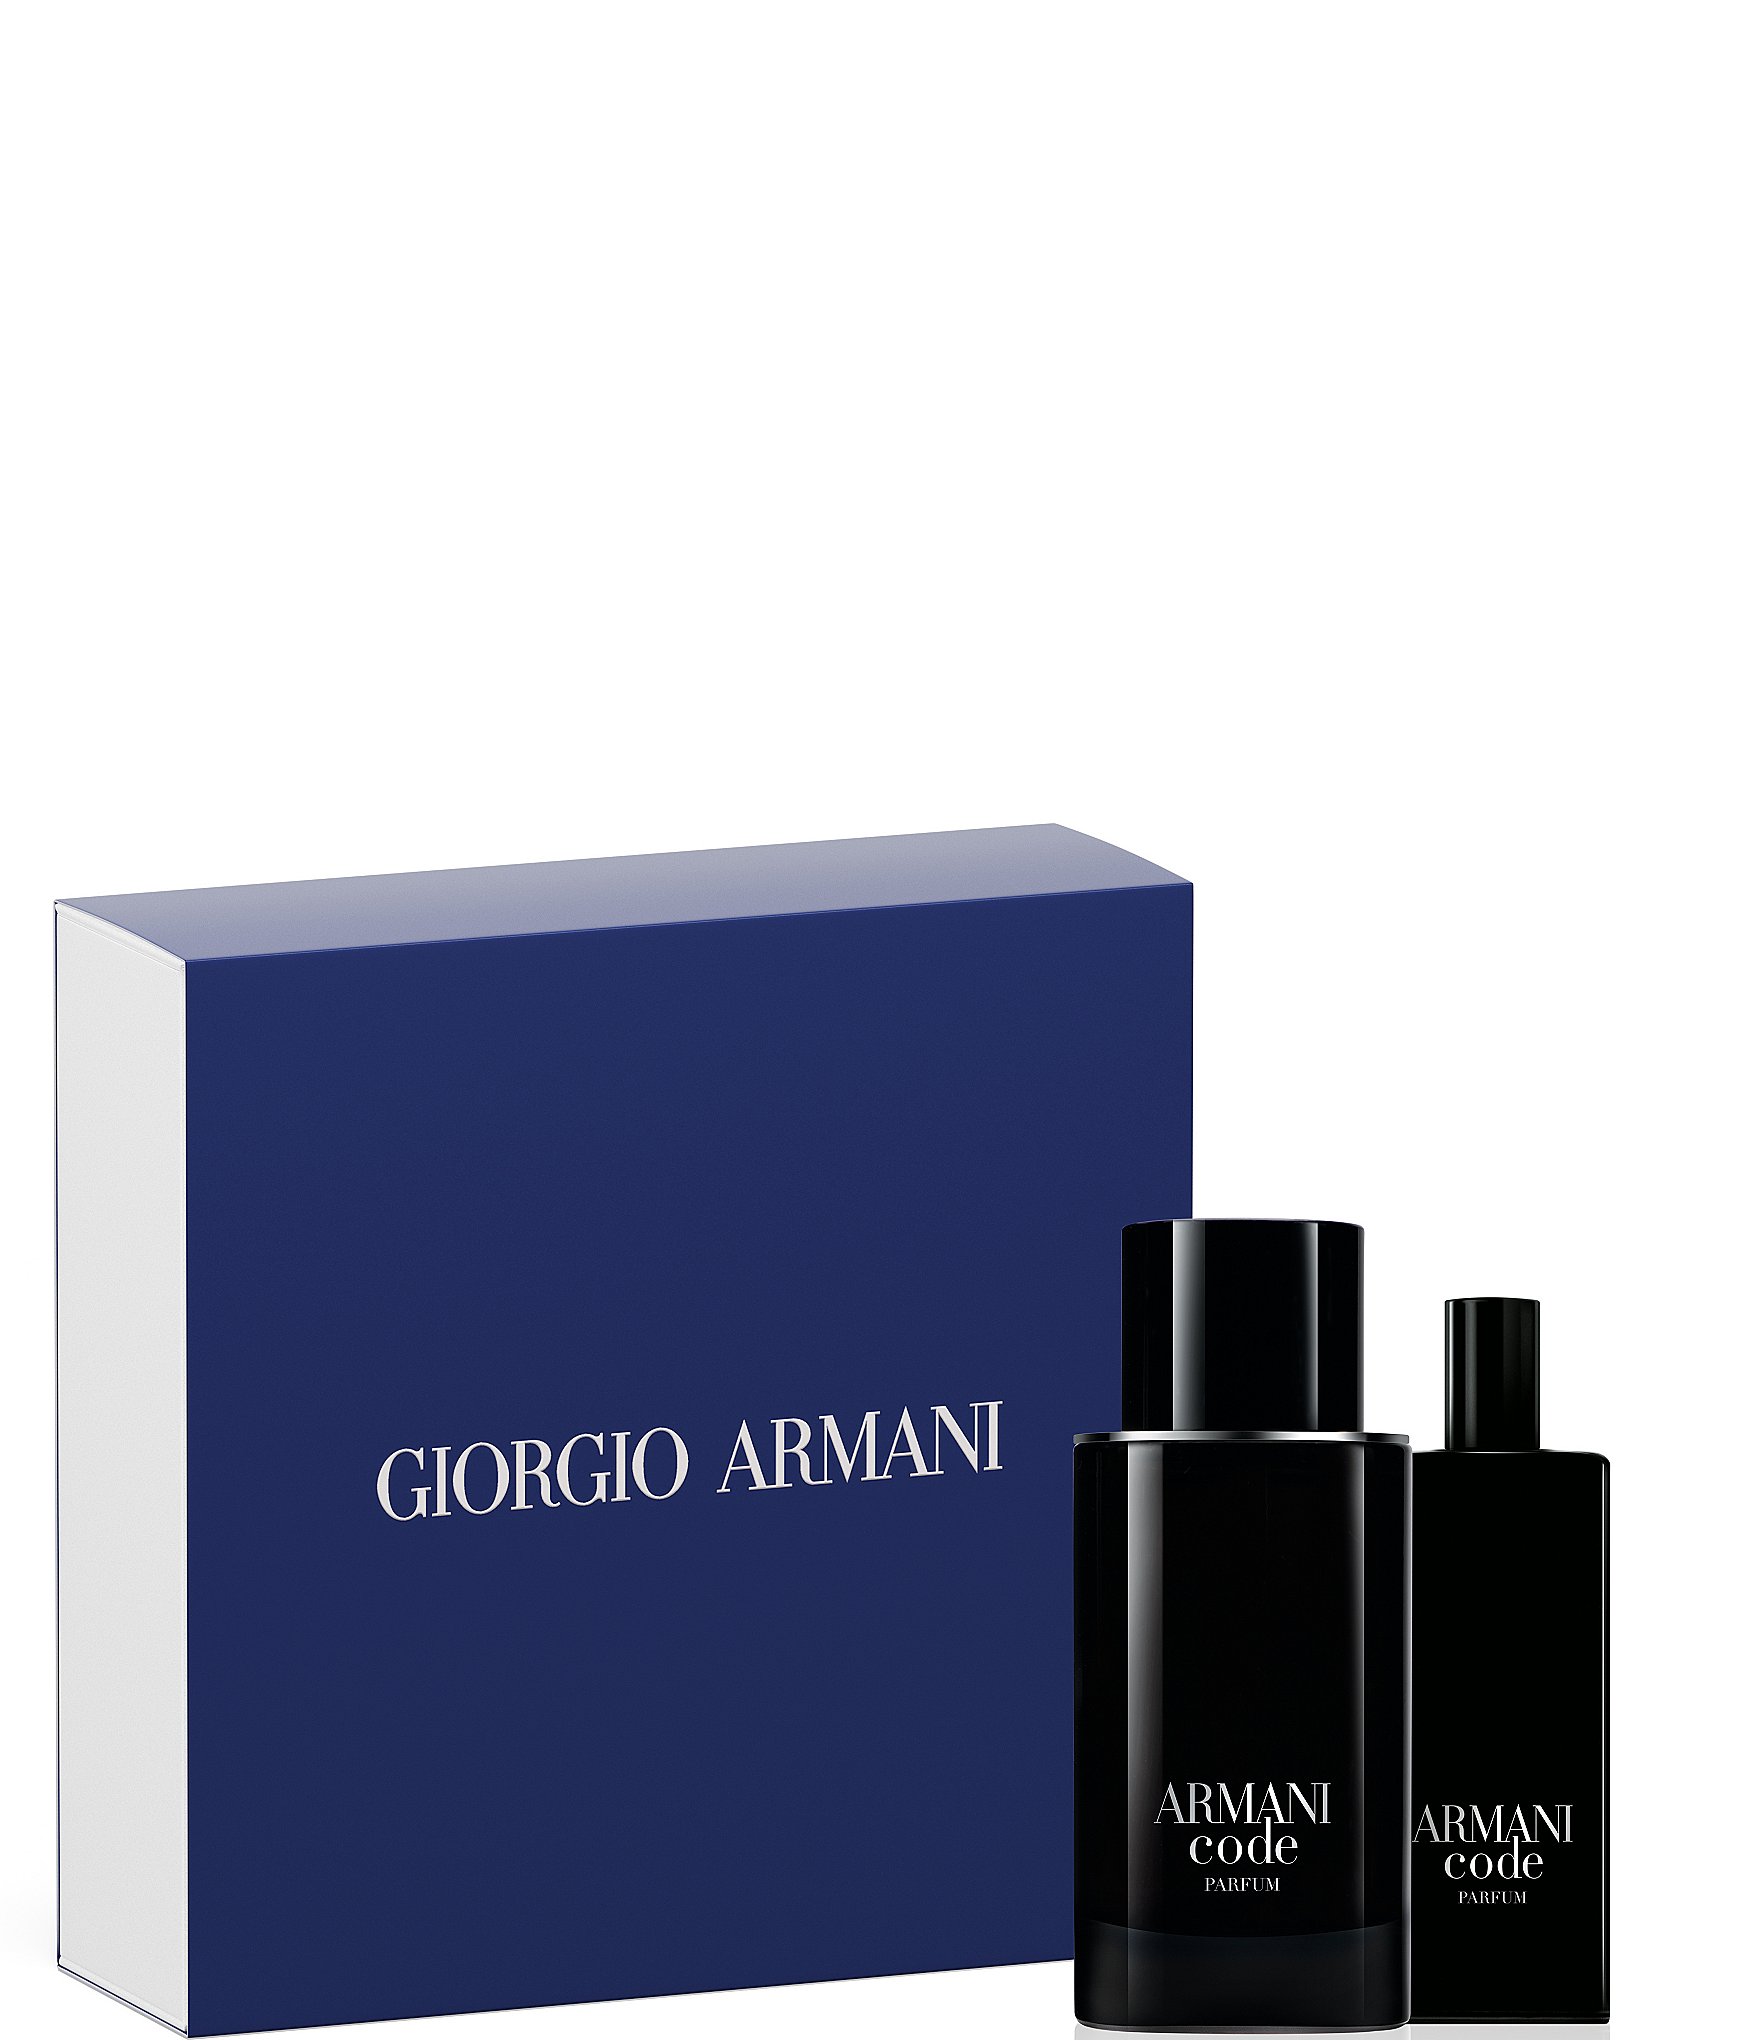 Armani Code for Men Eau de Parfum Spray Vial by Giorgio Armani